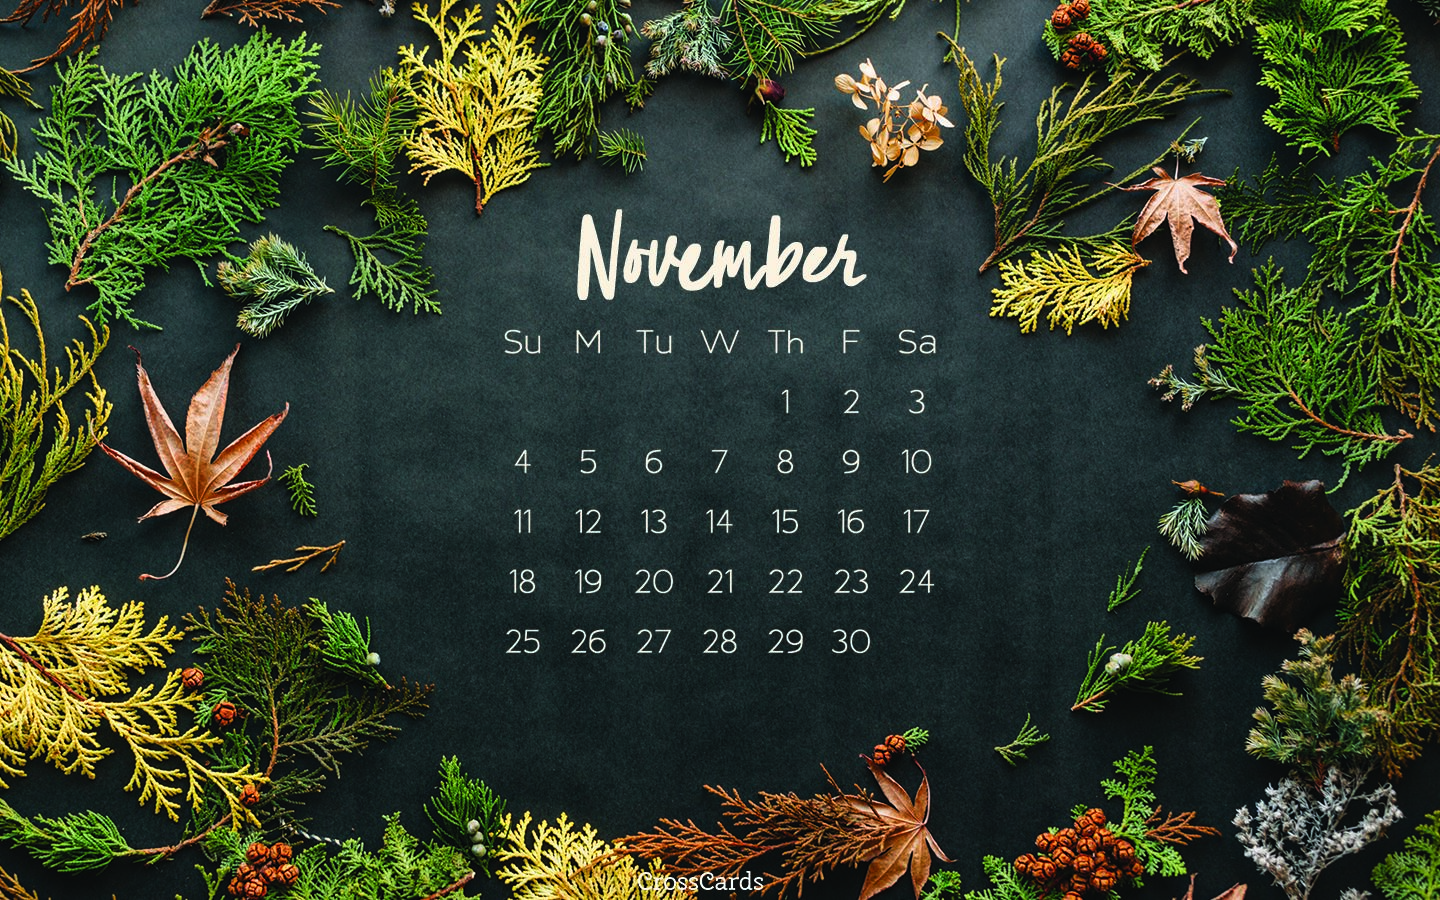 November 2018 Autumn Desktop Calendar Free November Wallpaper